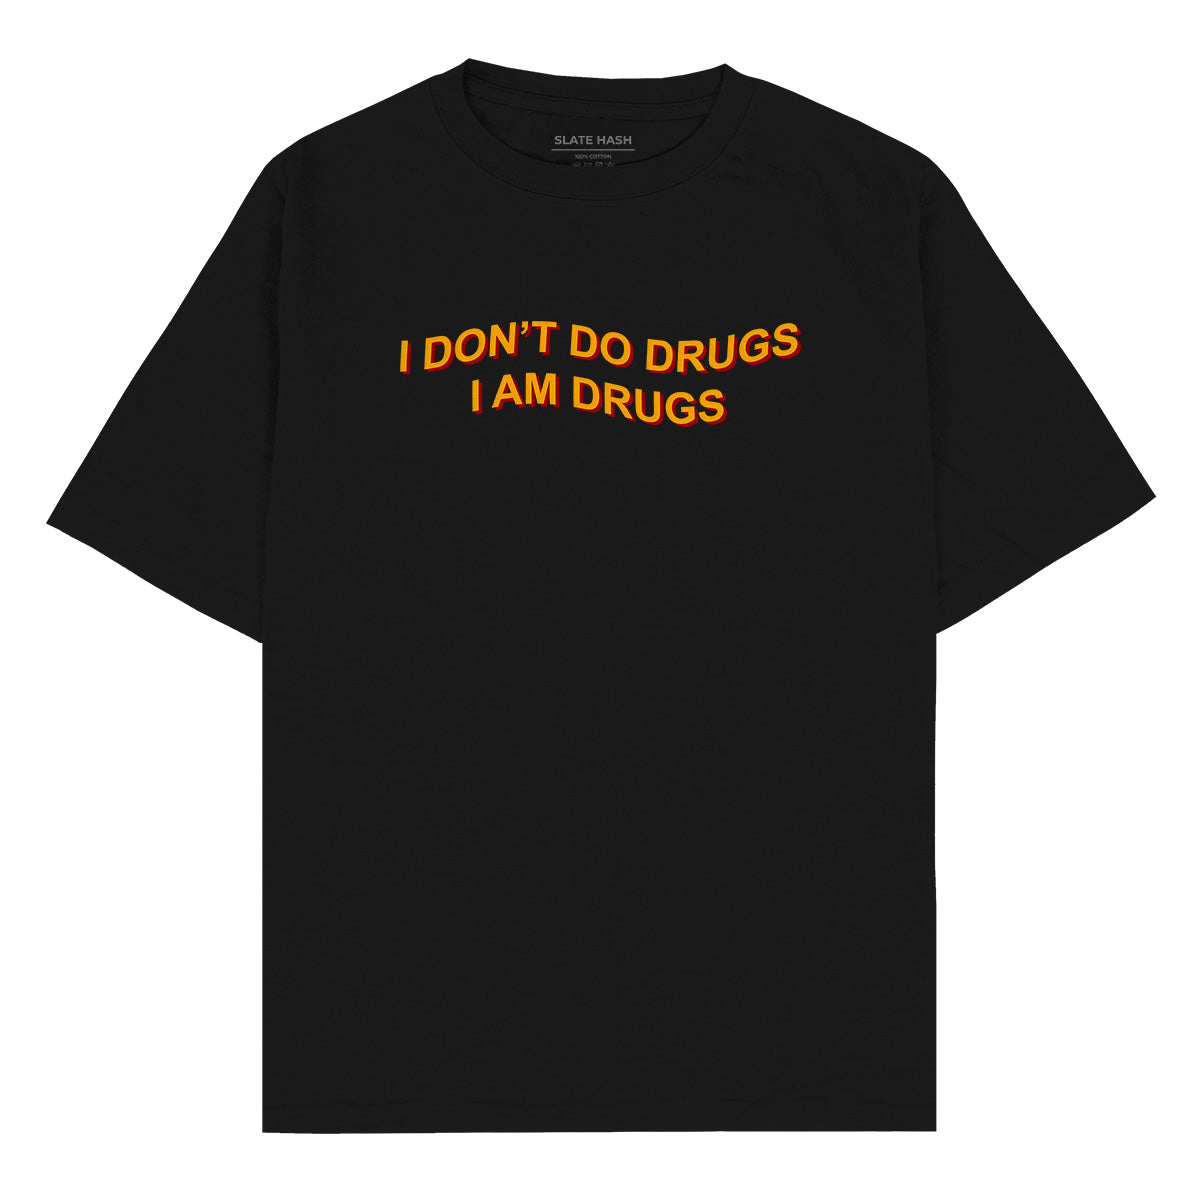 I DON'T DO DRUGS Oversized T-shirt